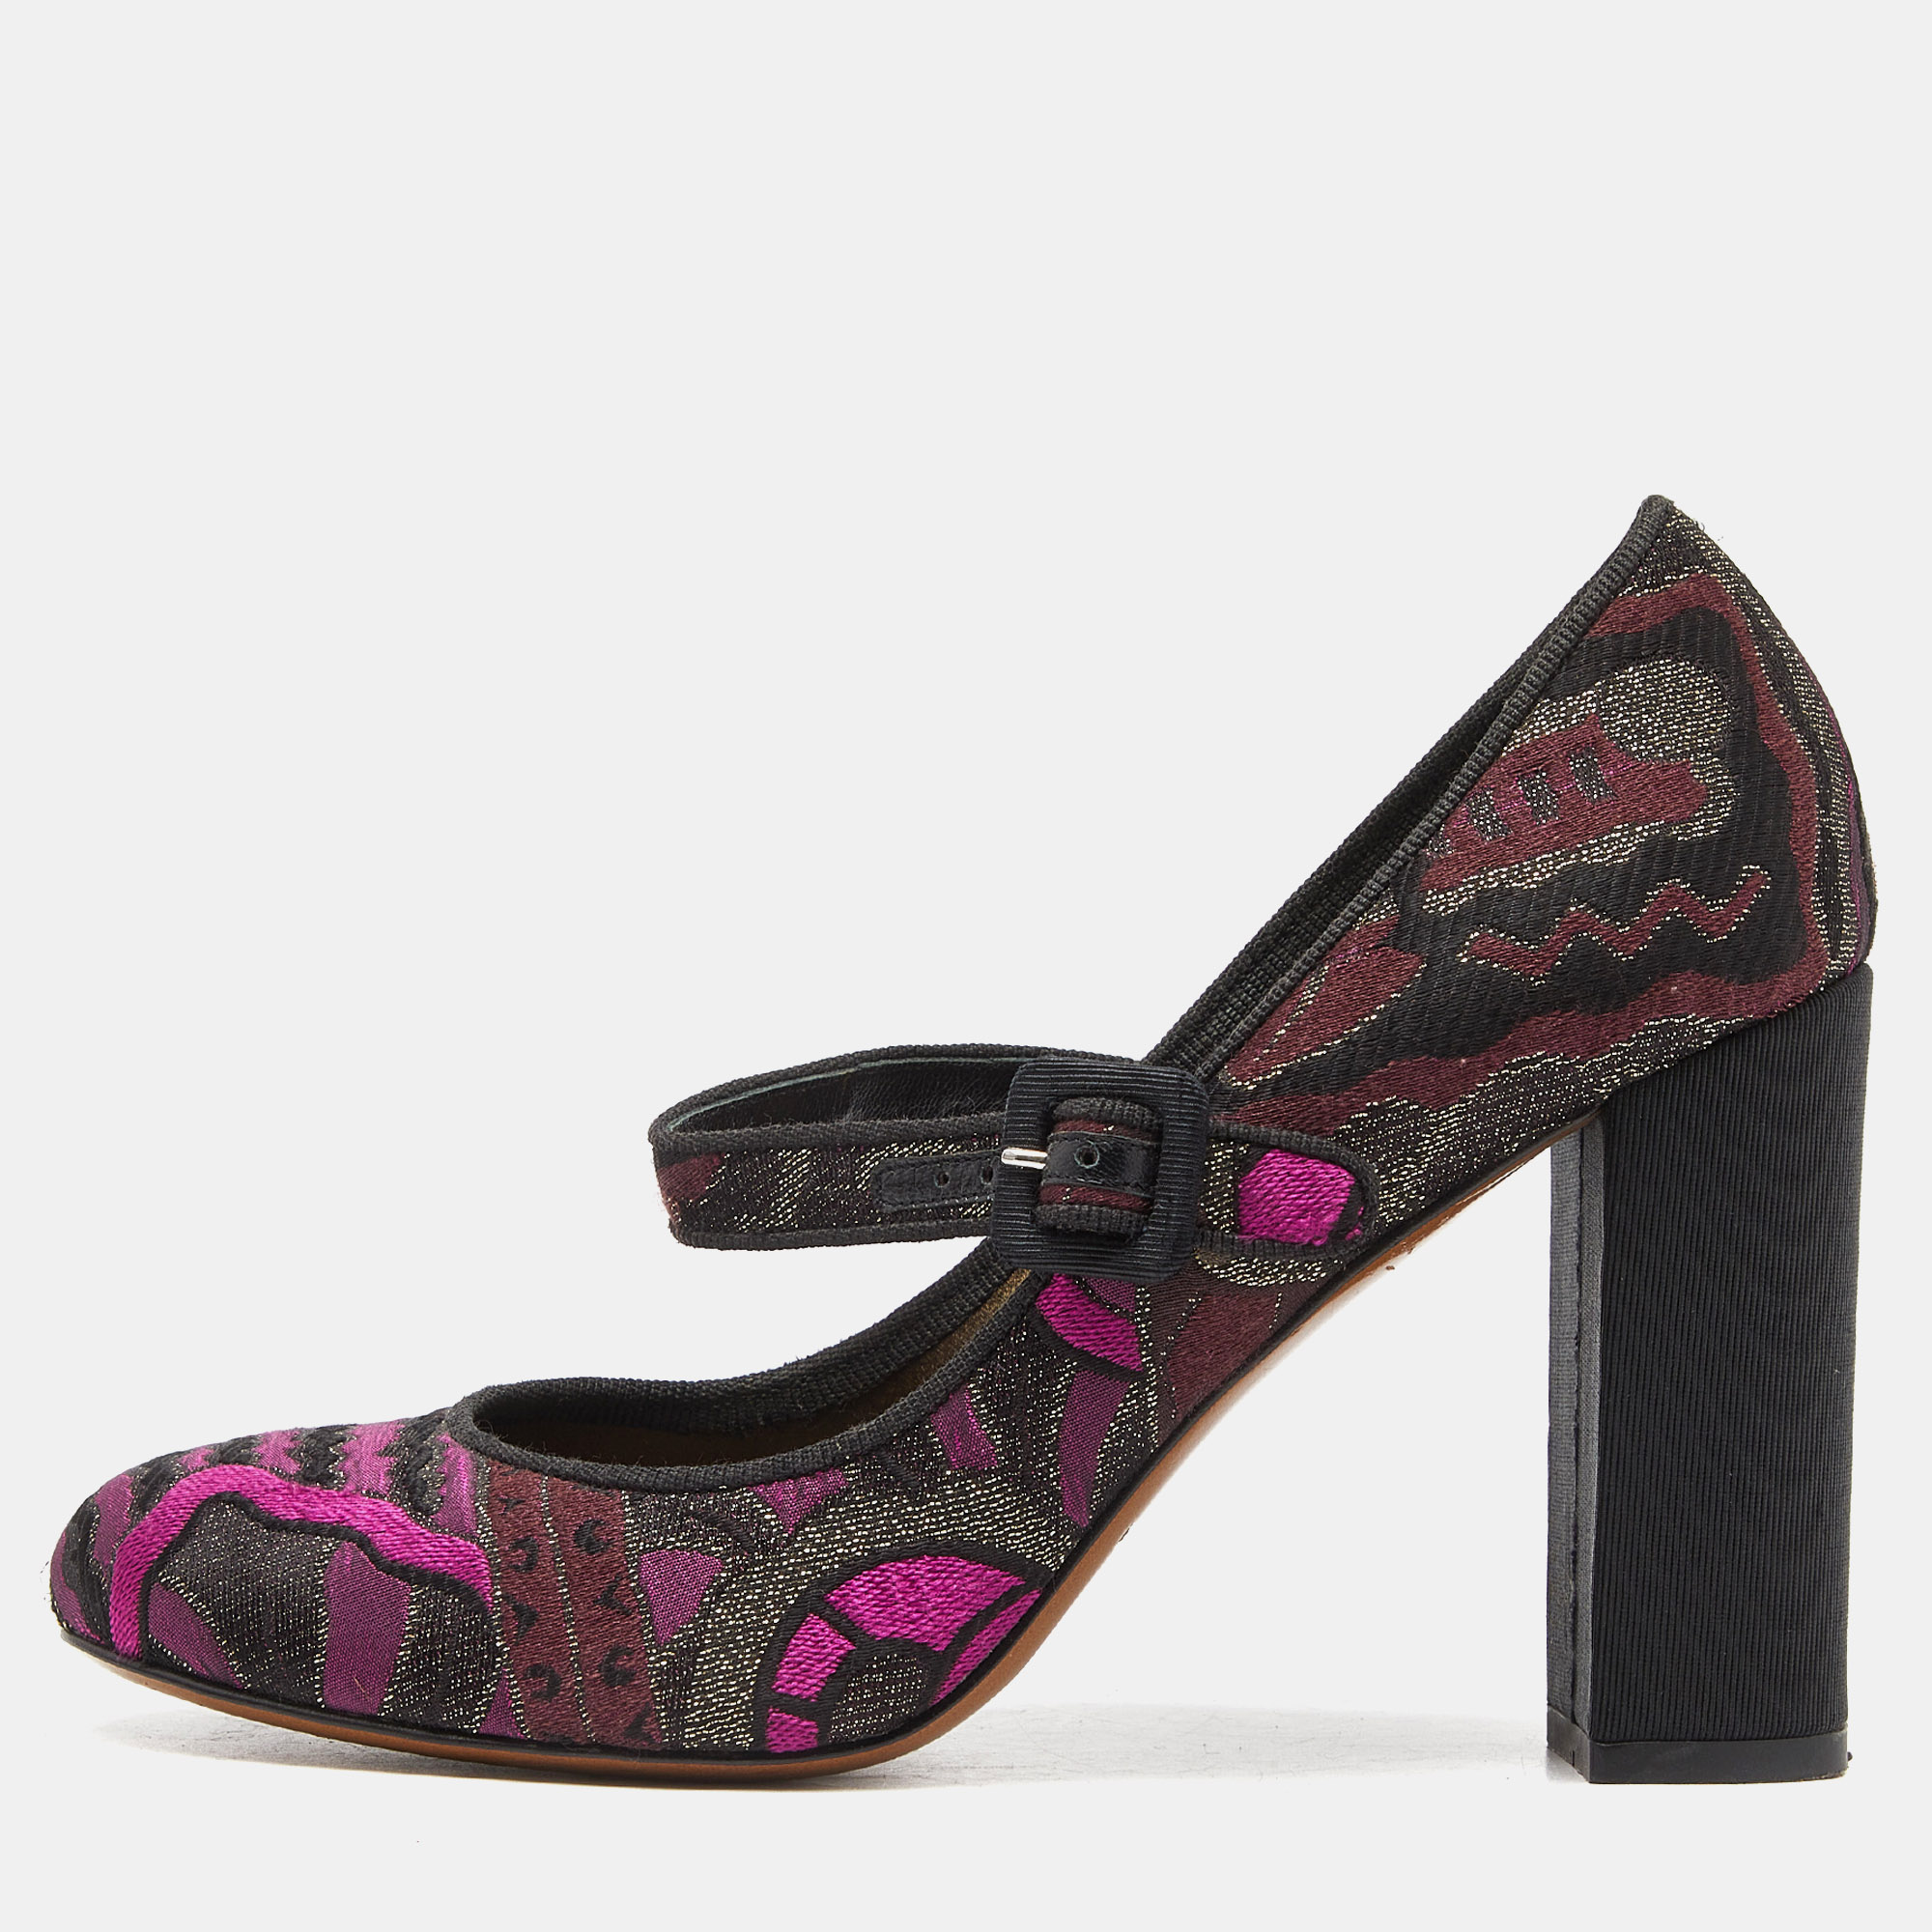 Etro purple/black brocade fabric block heel pumps size 37